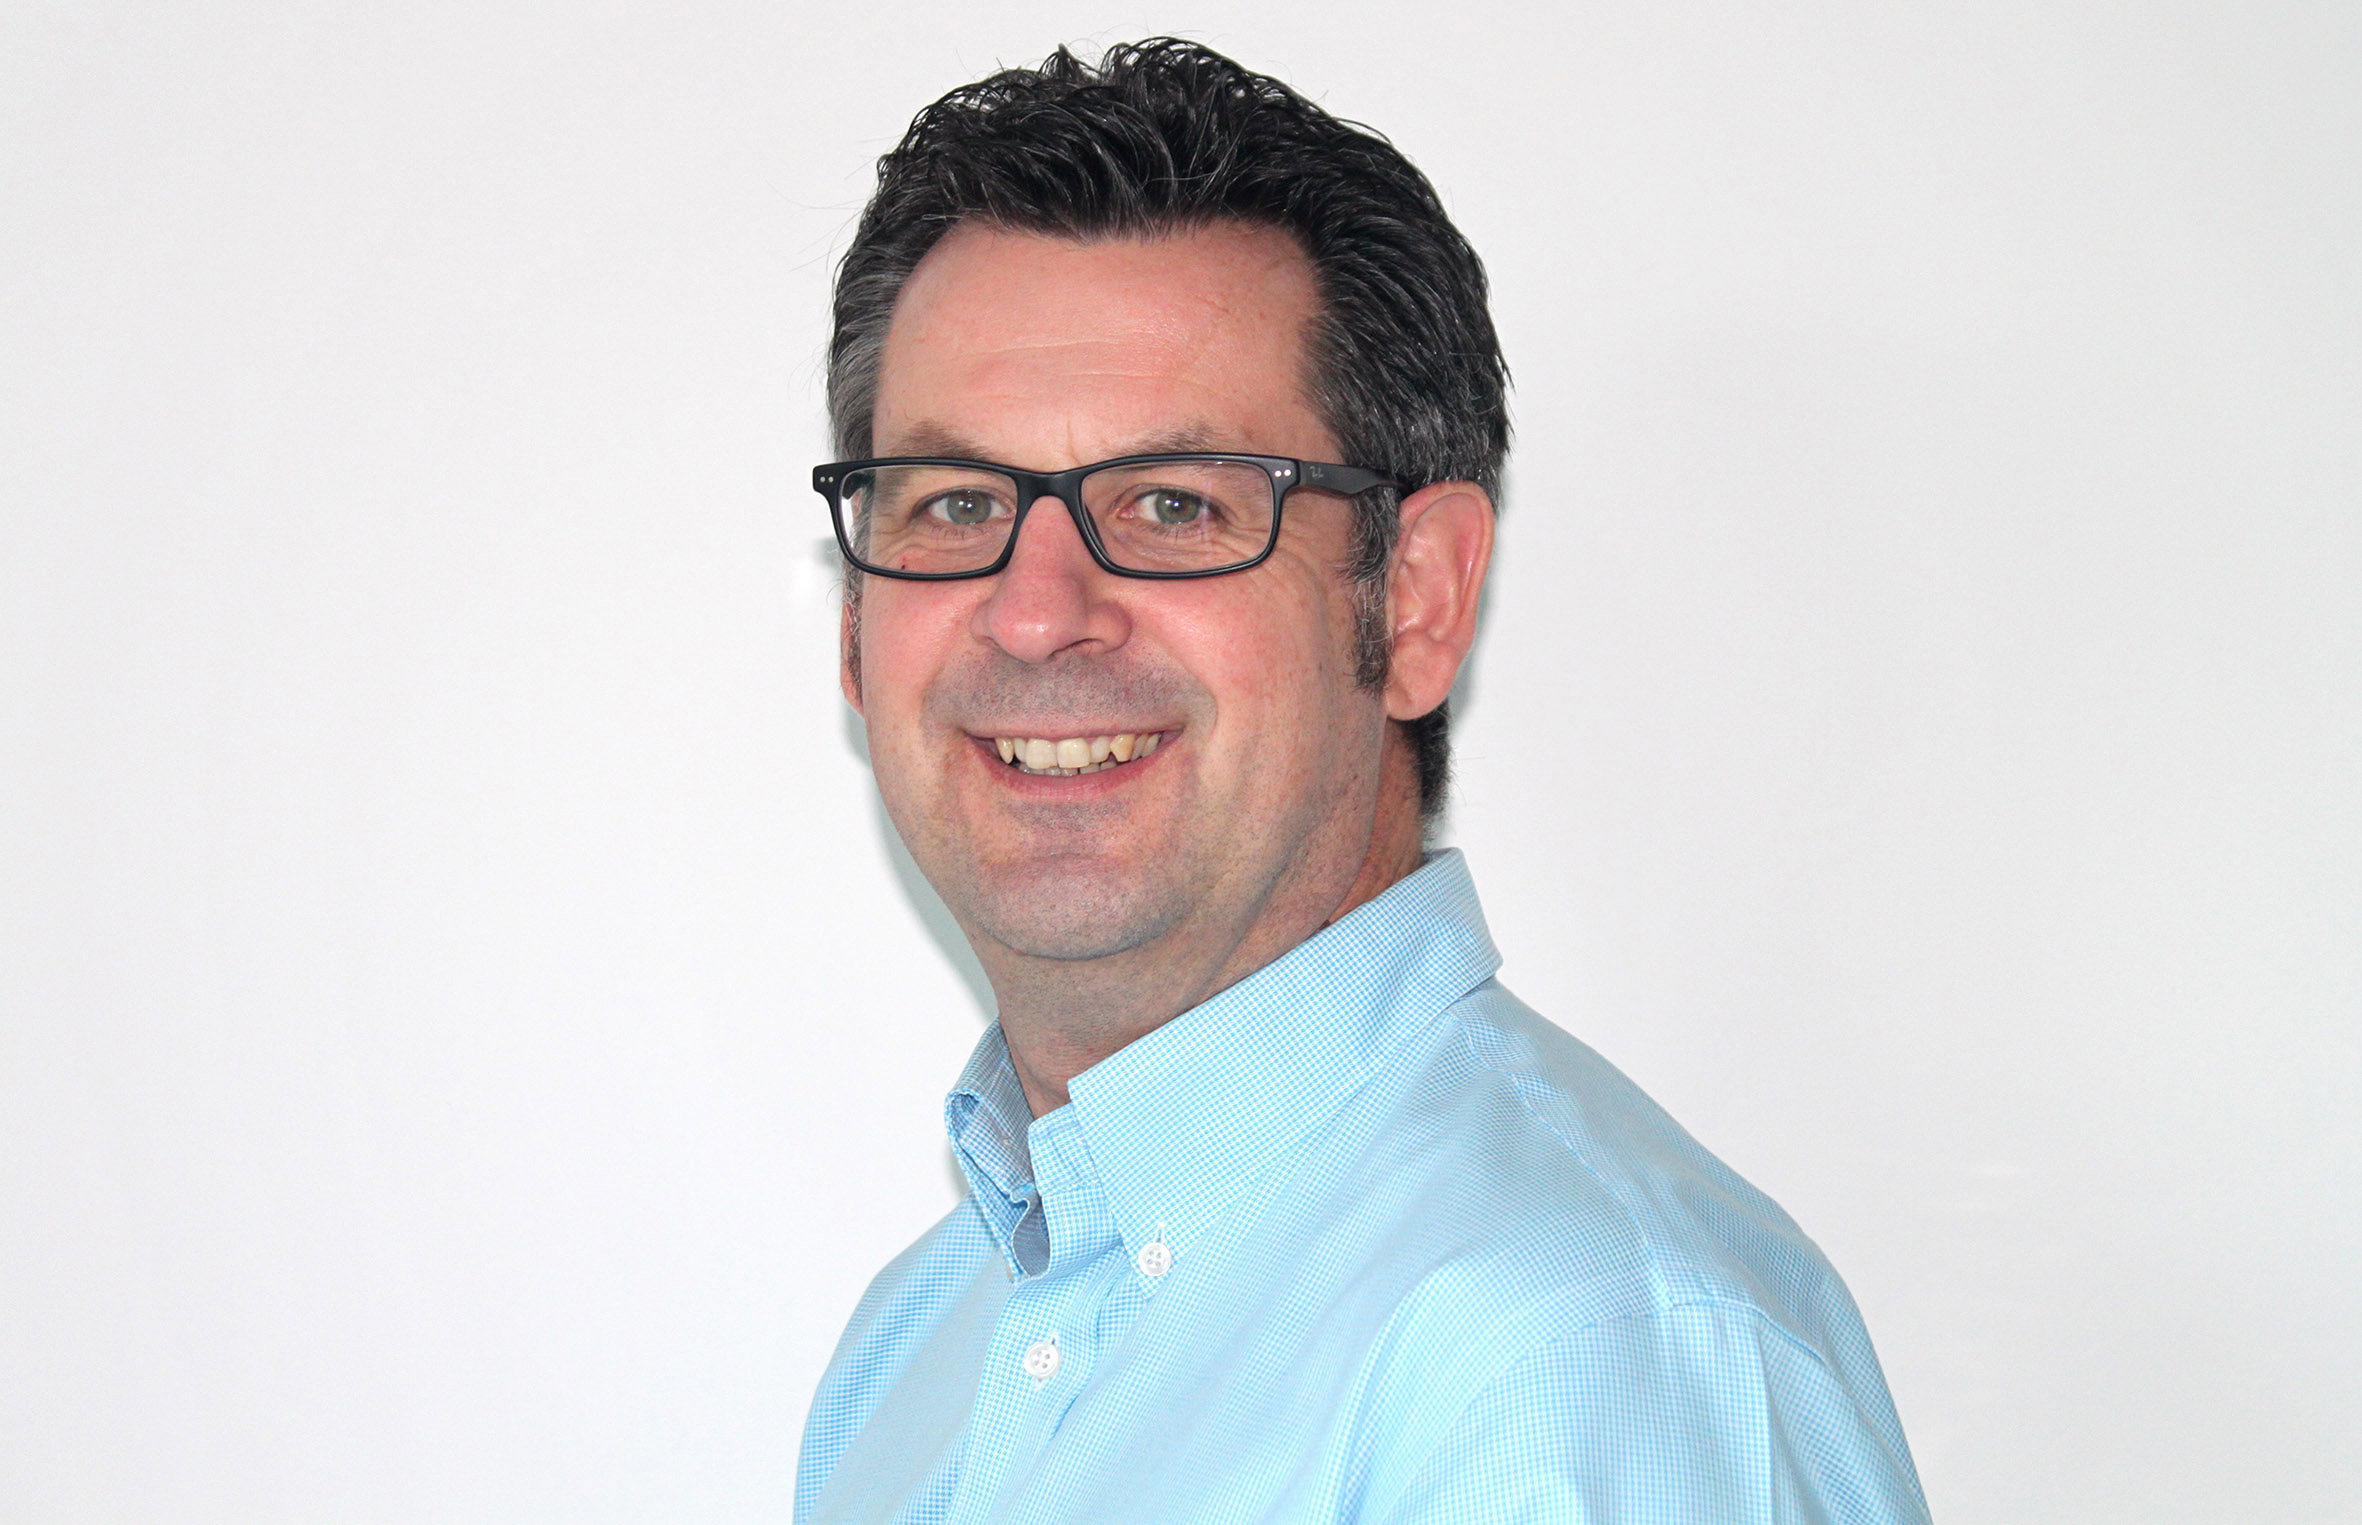 Peter Waggott, Managing Director of Powercases (Scotland) Ltd